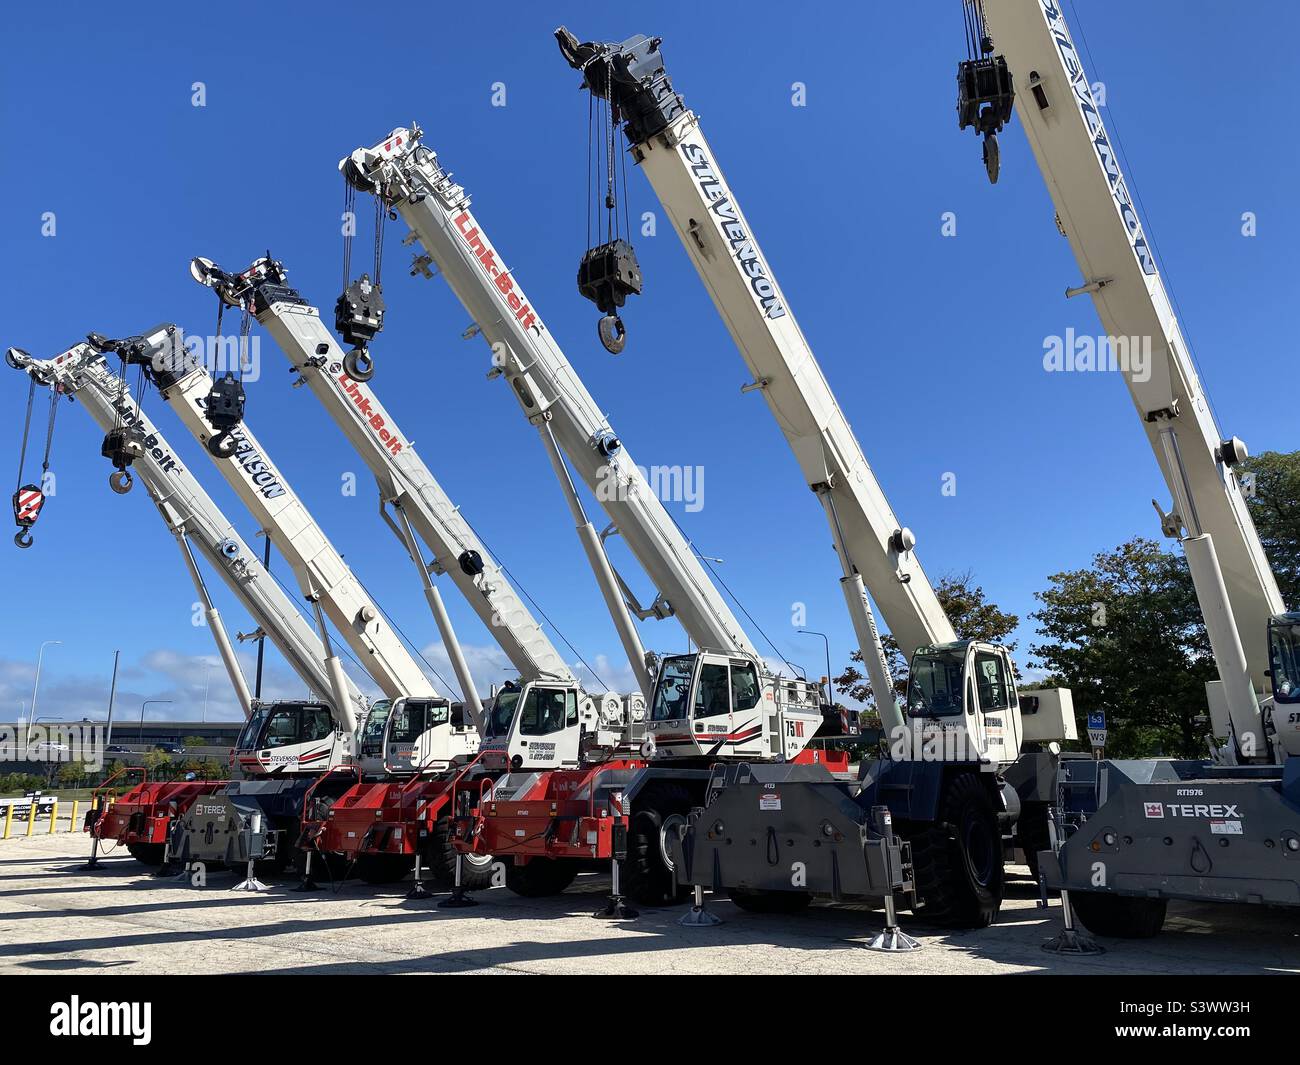 Row of cranes in Chicago Stock Photo